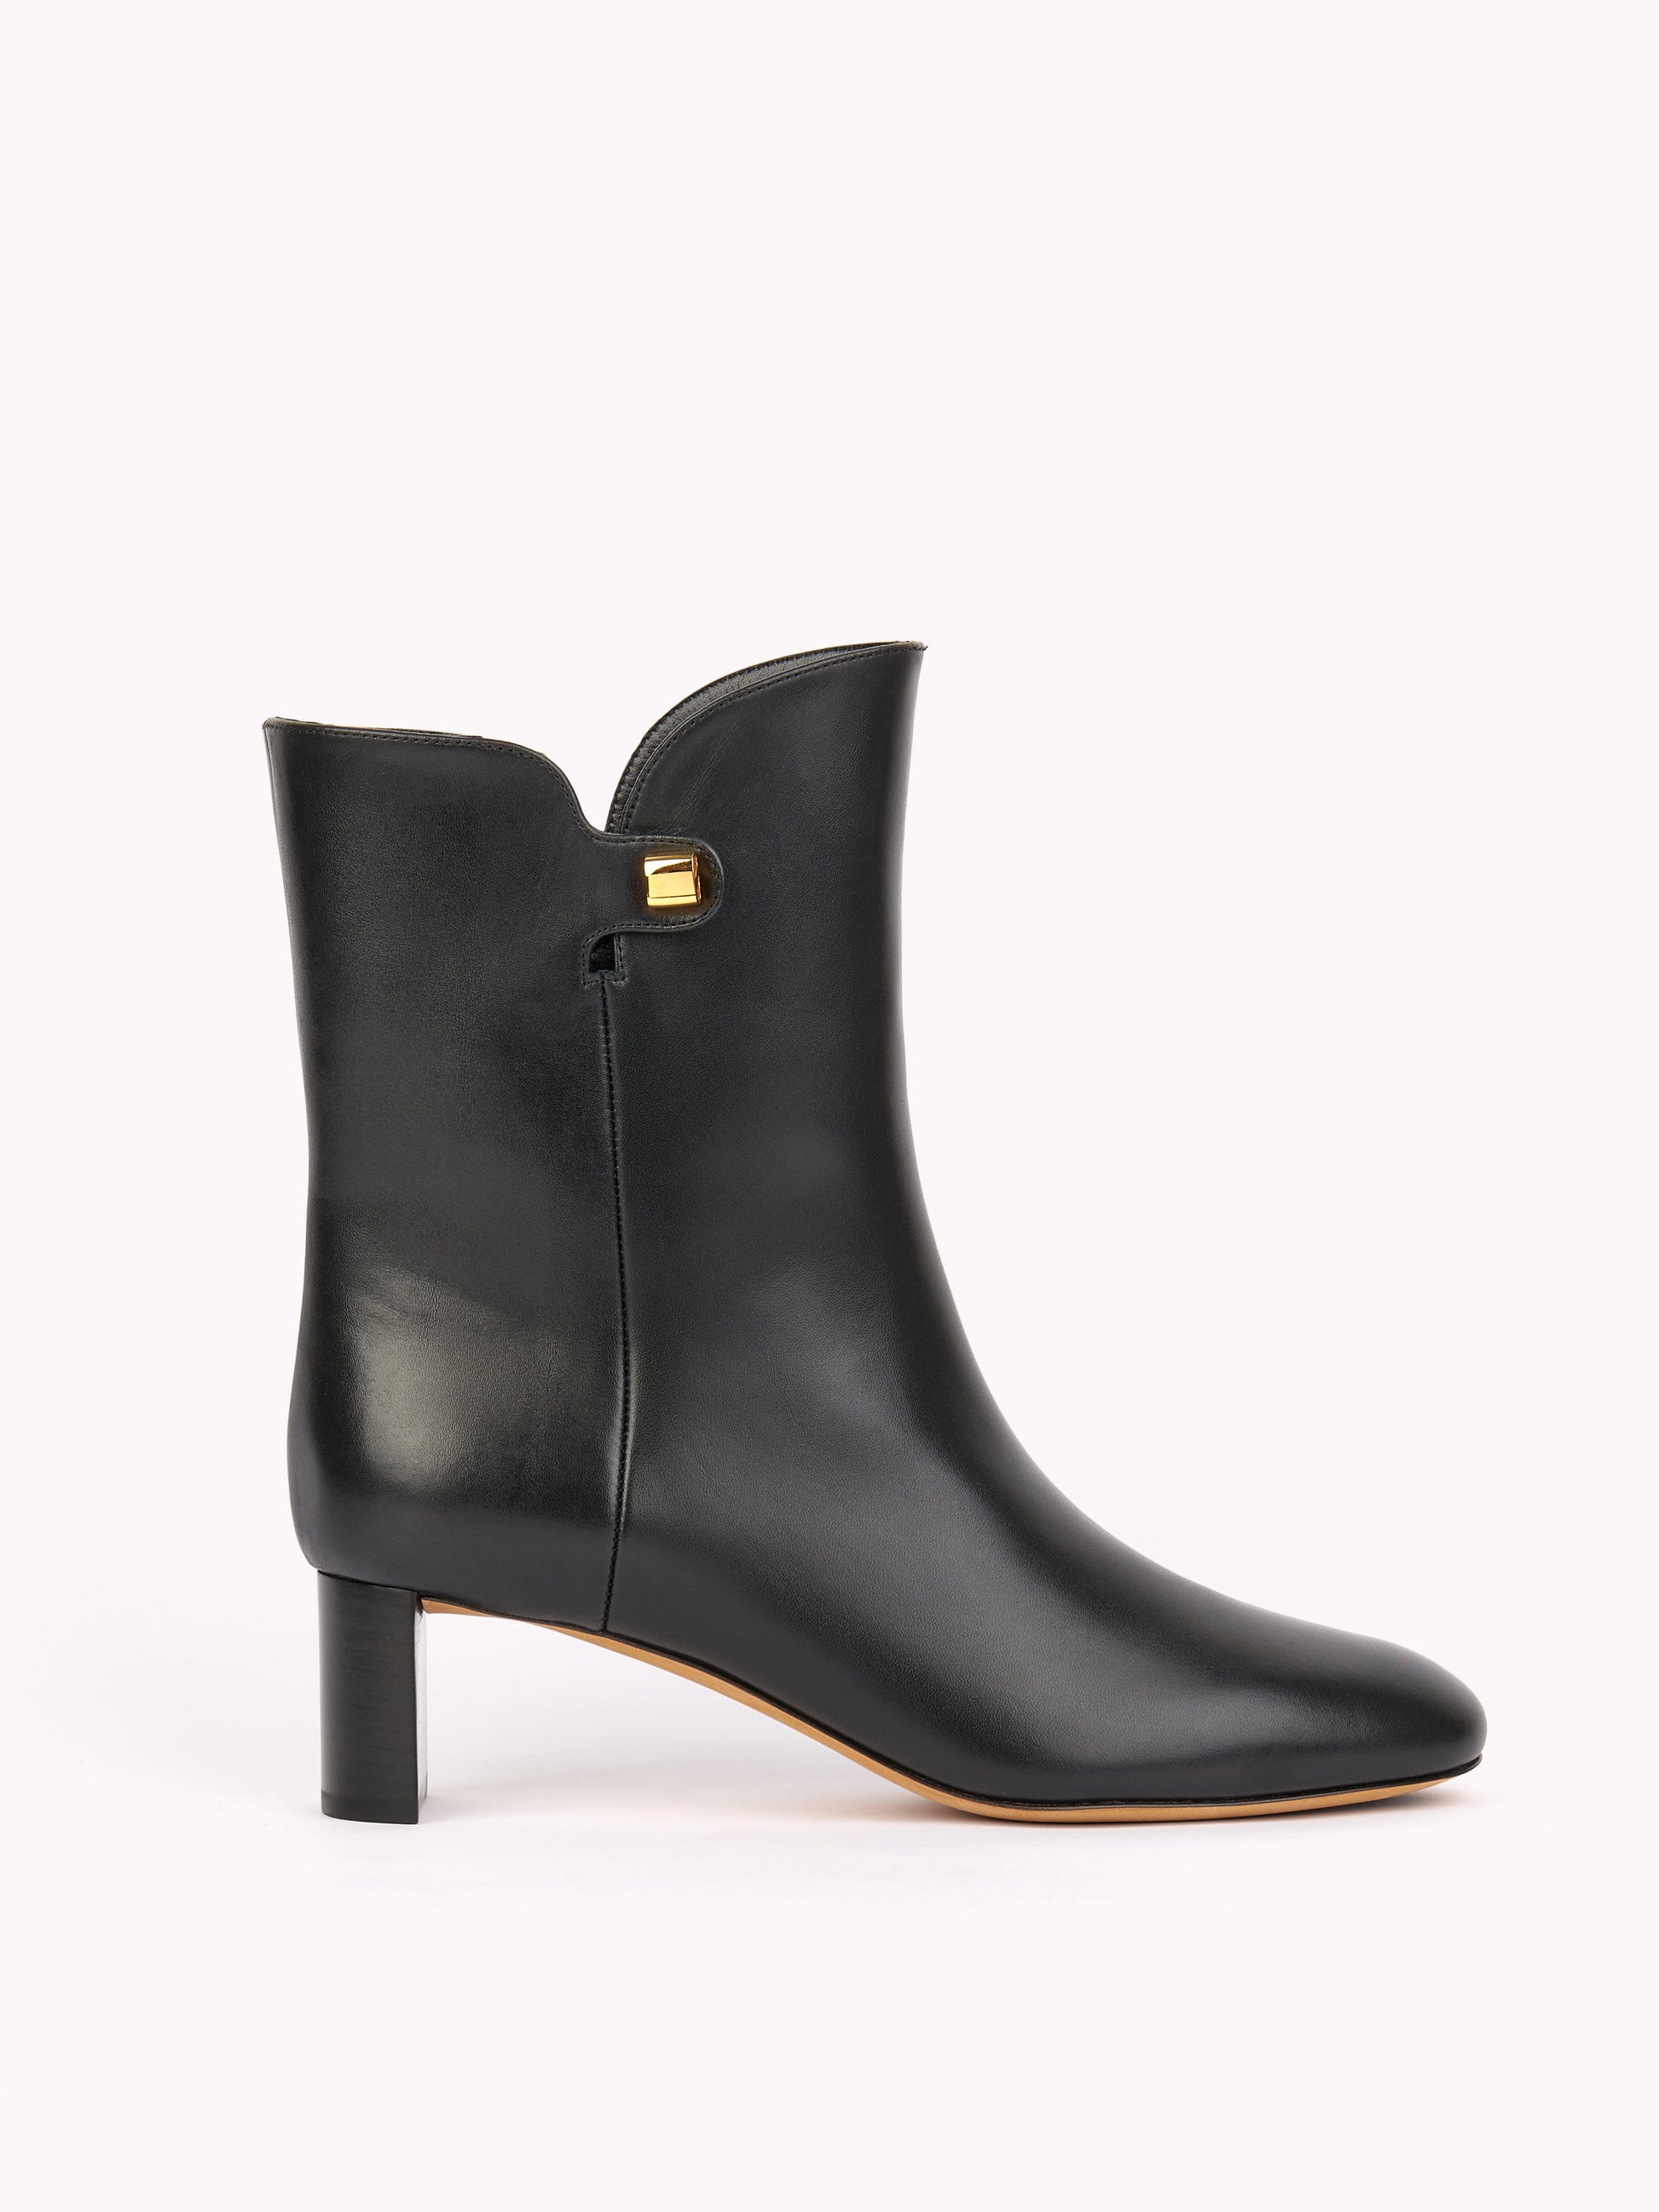 designer ankle boots black leather mid-heel skorpios